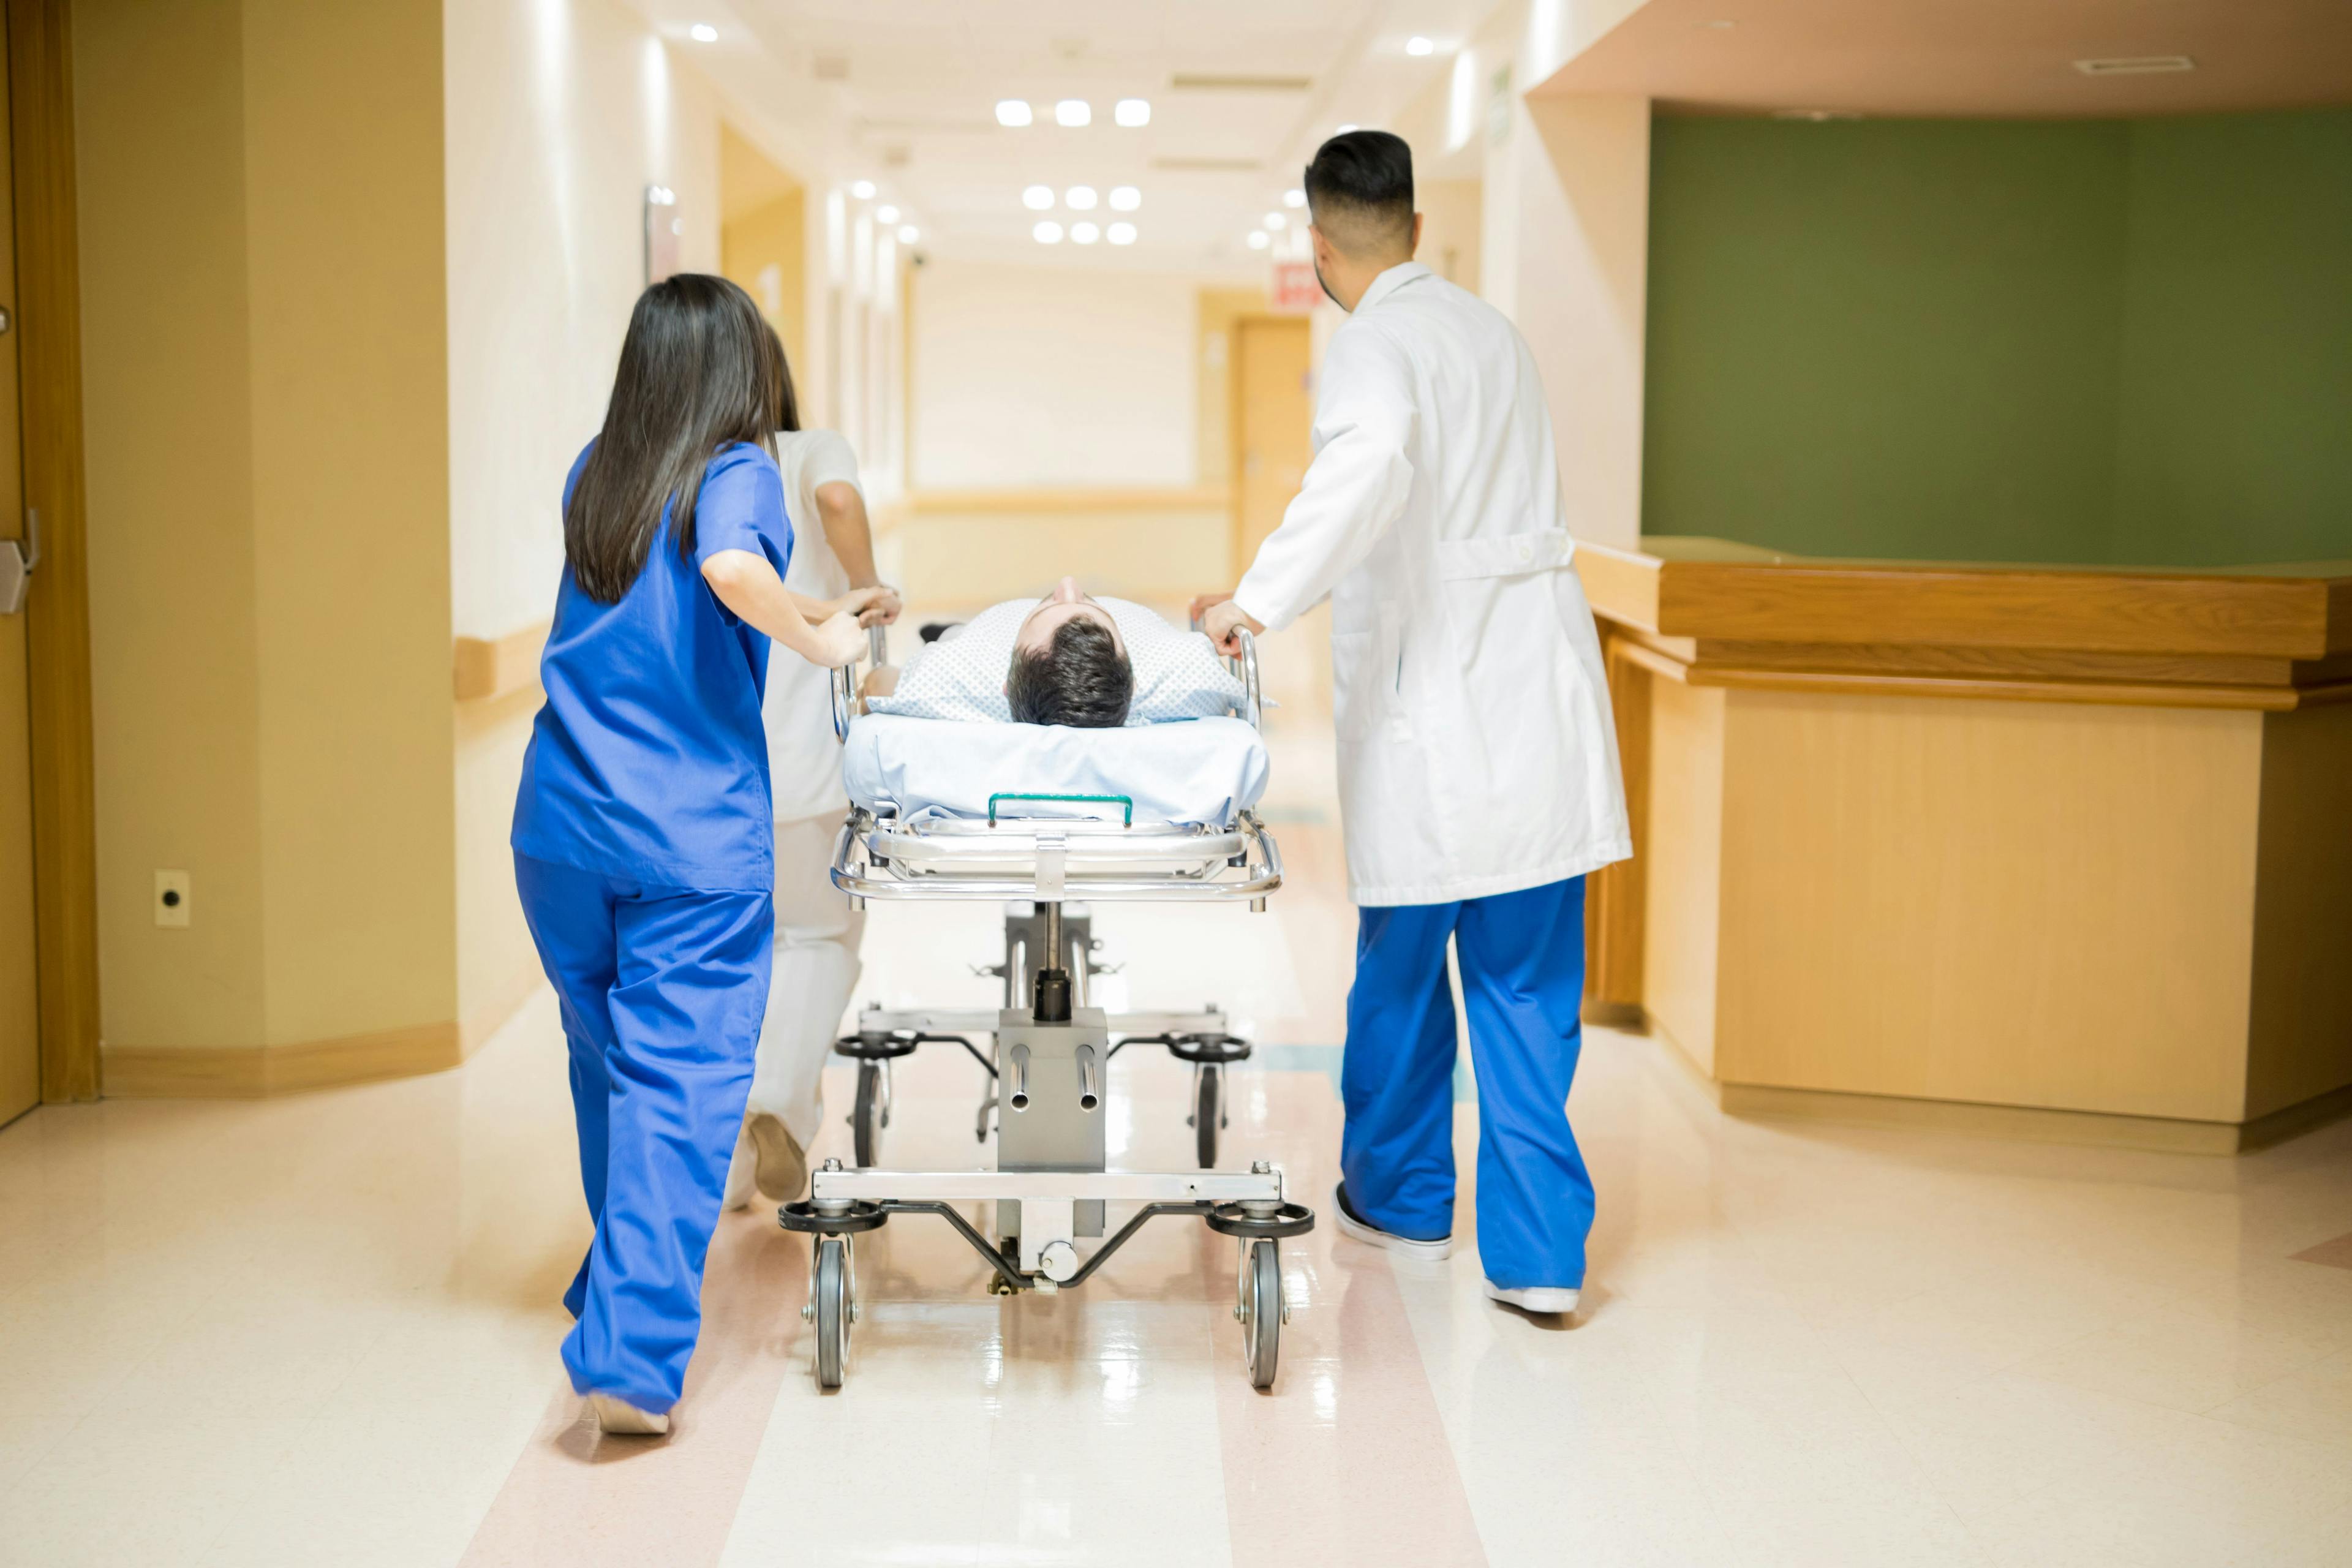 How U.S. News puts together its ‘Best Hospitals’ rankings